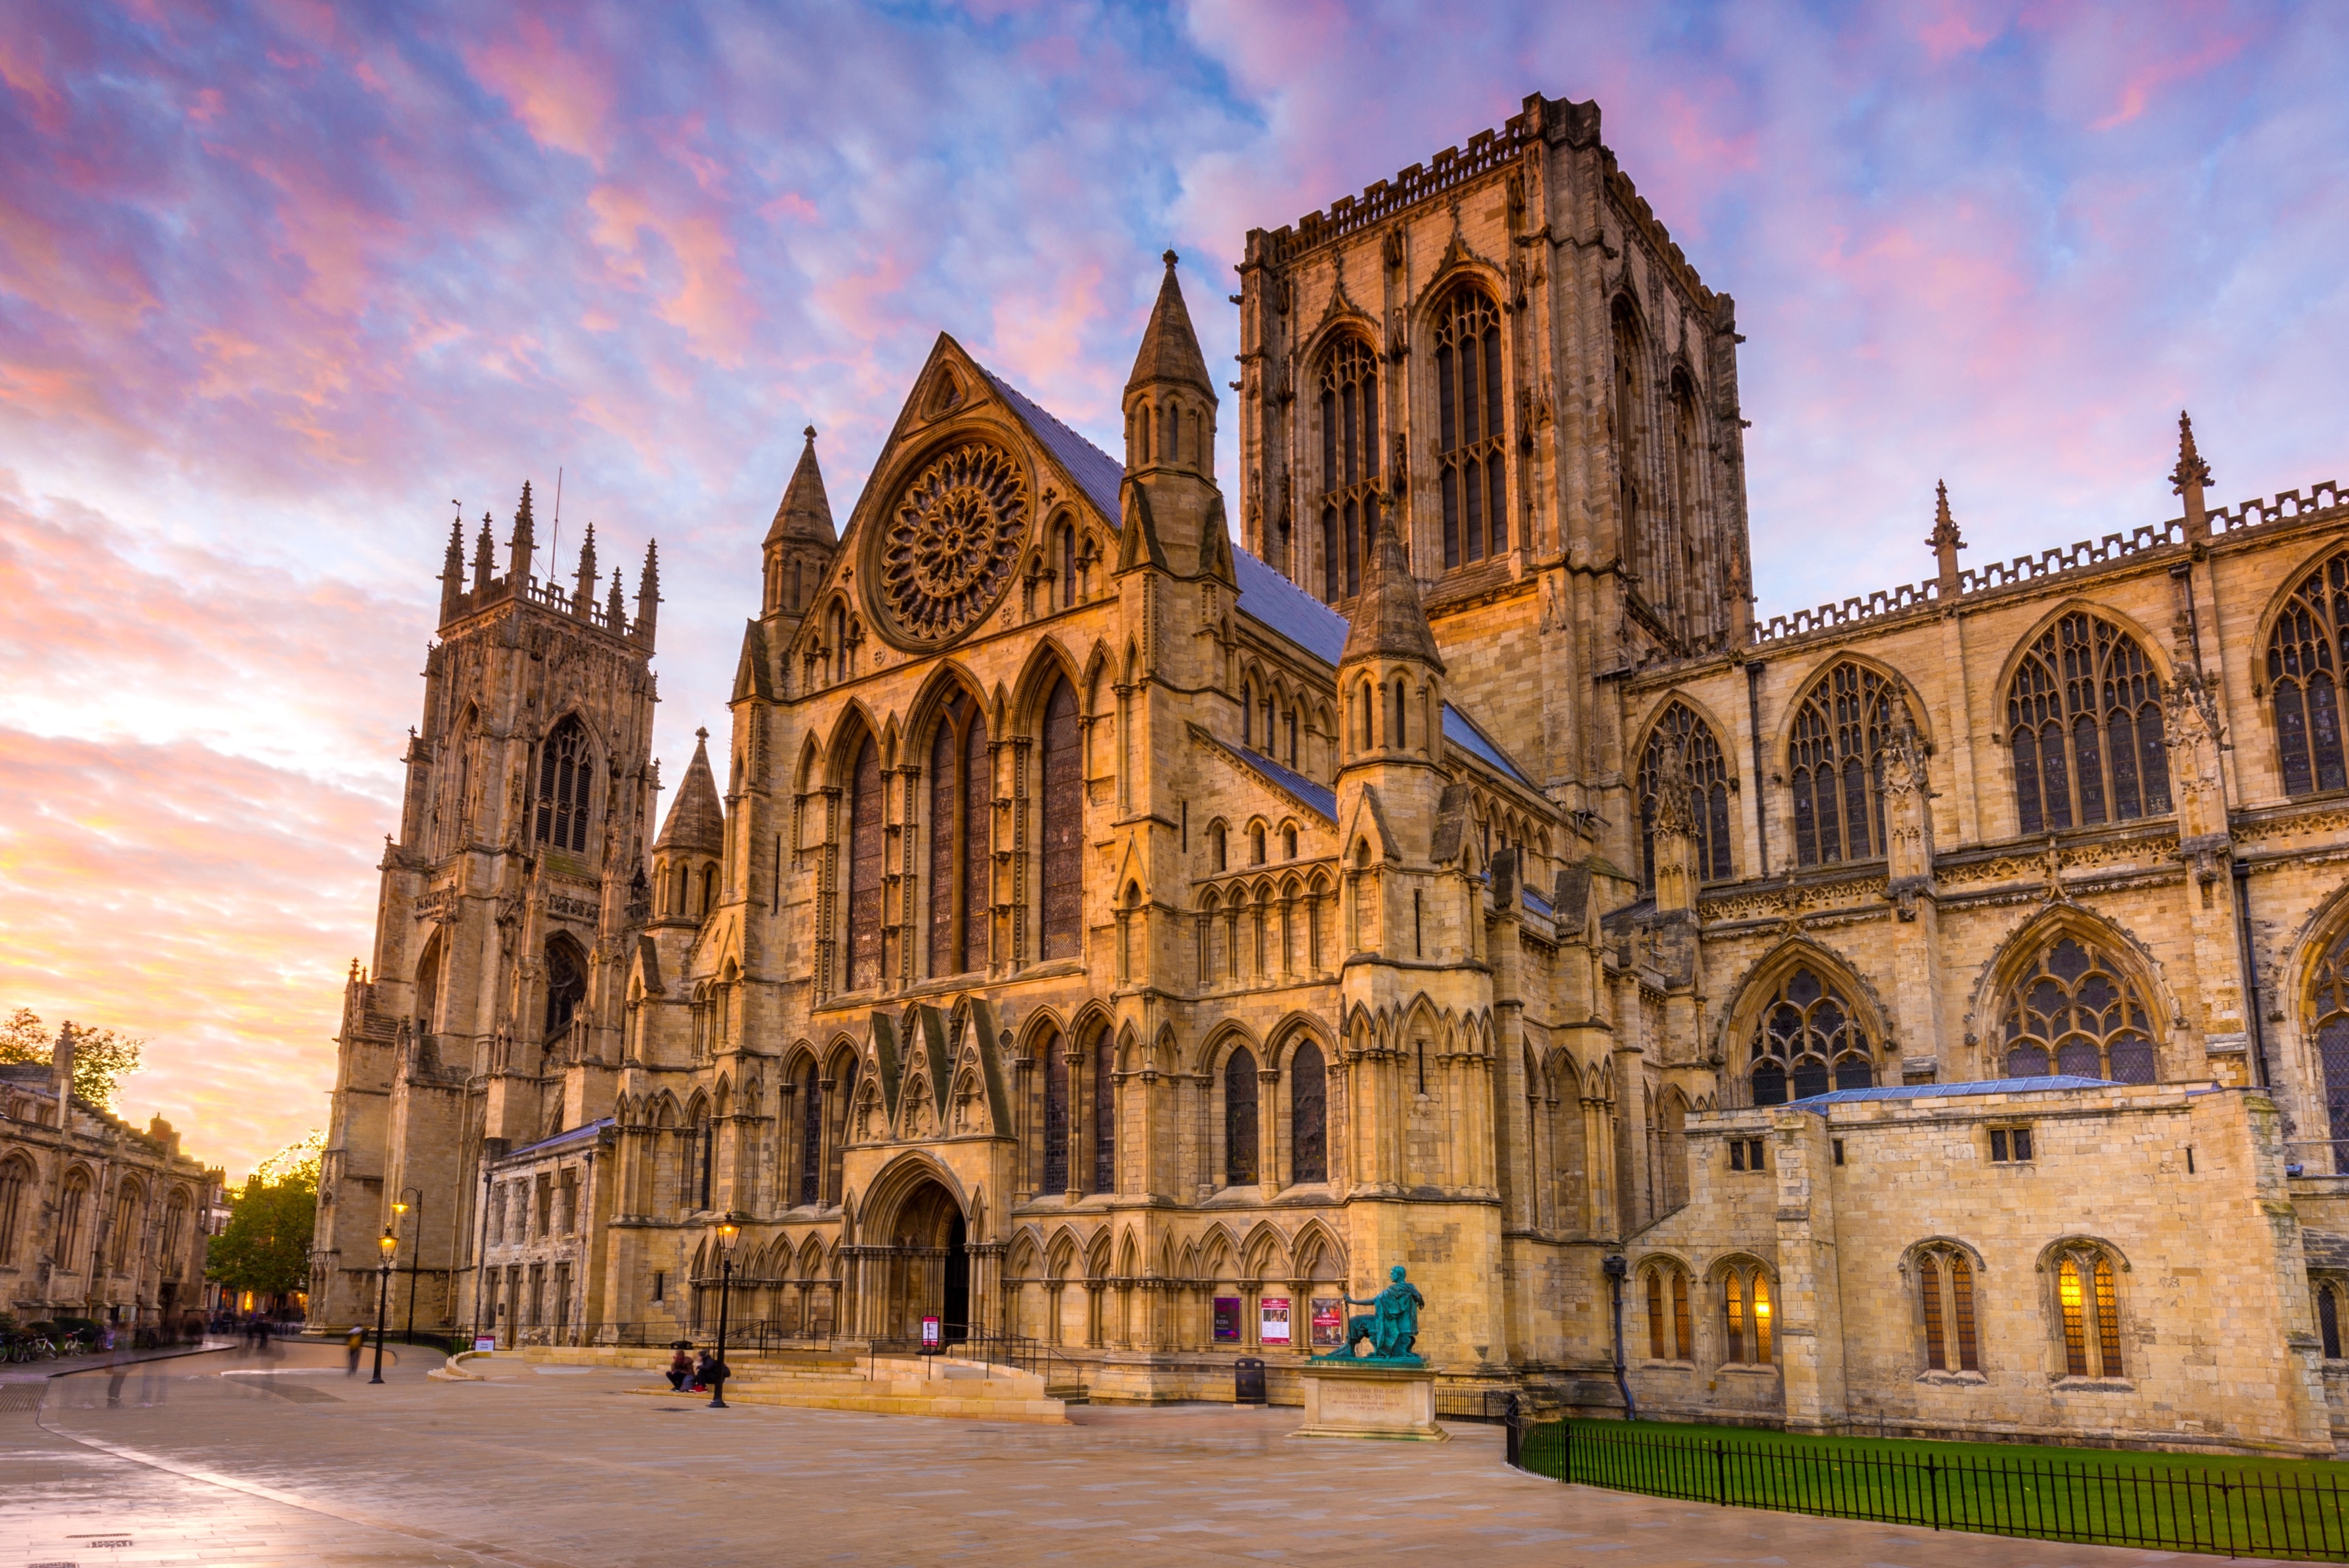 Visit York Minster in York | Expedia